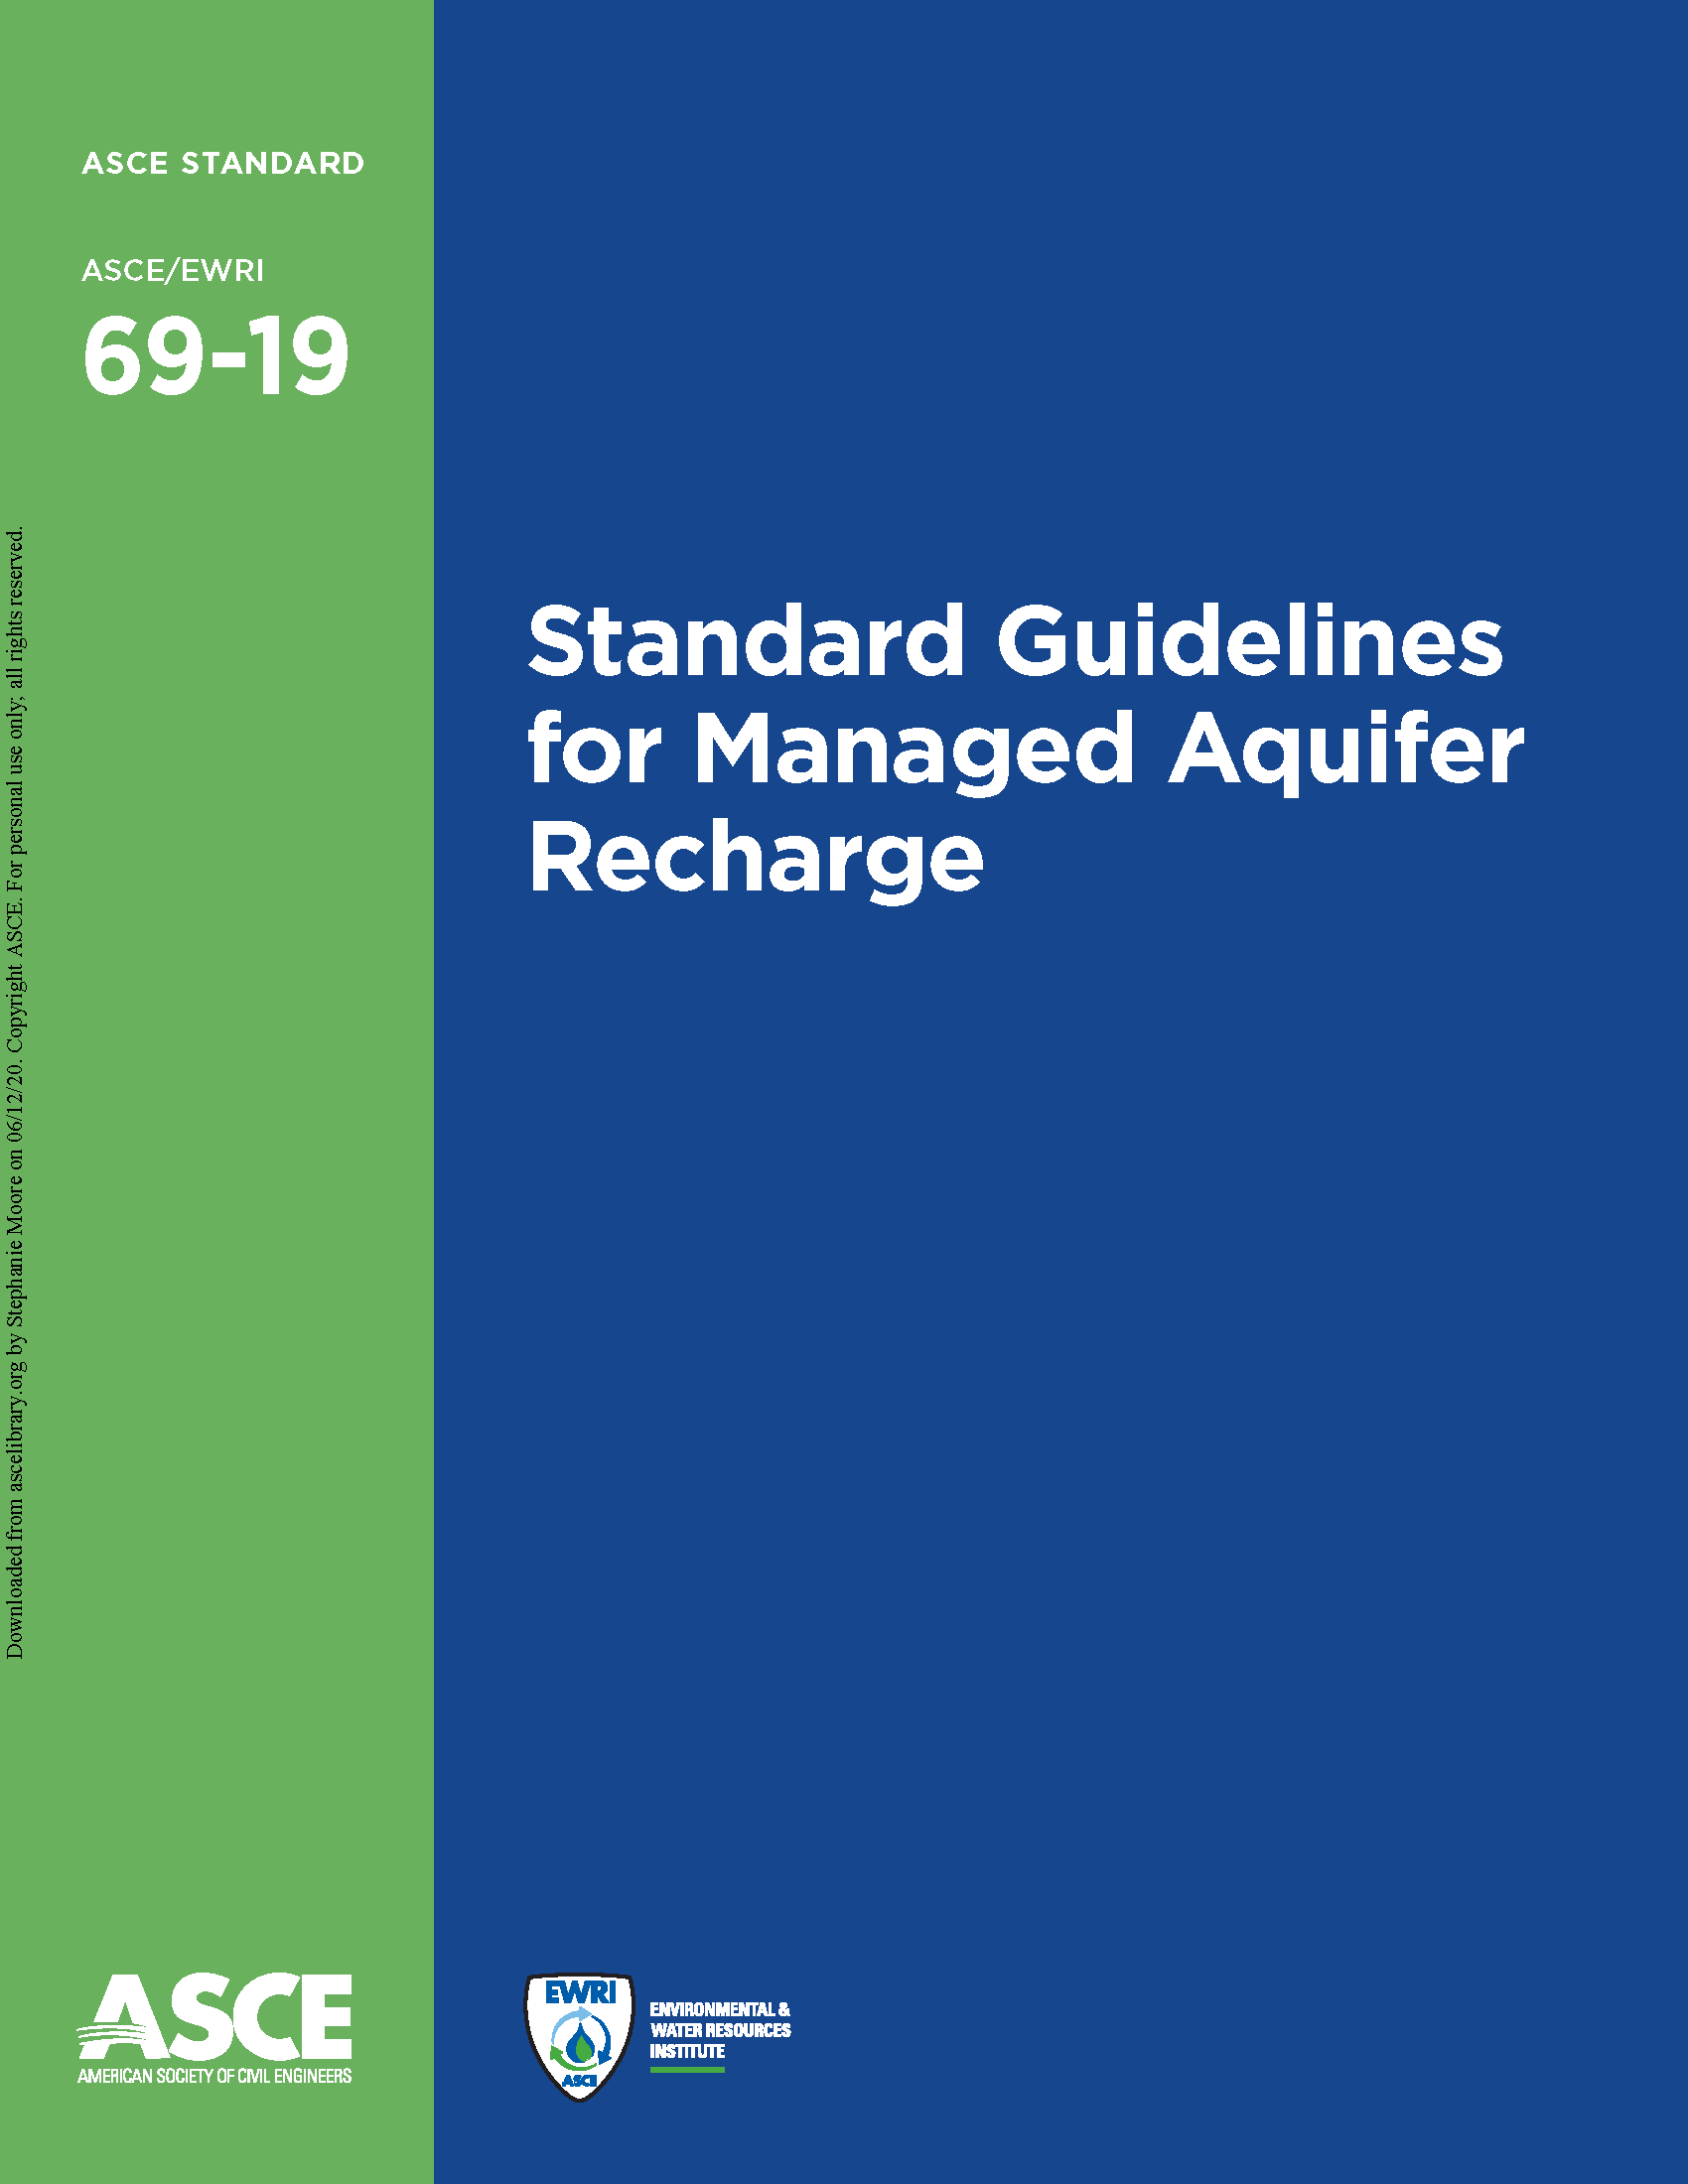 ASCE Publishes Standard Guidelines for Managed Aquifer Recharge